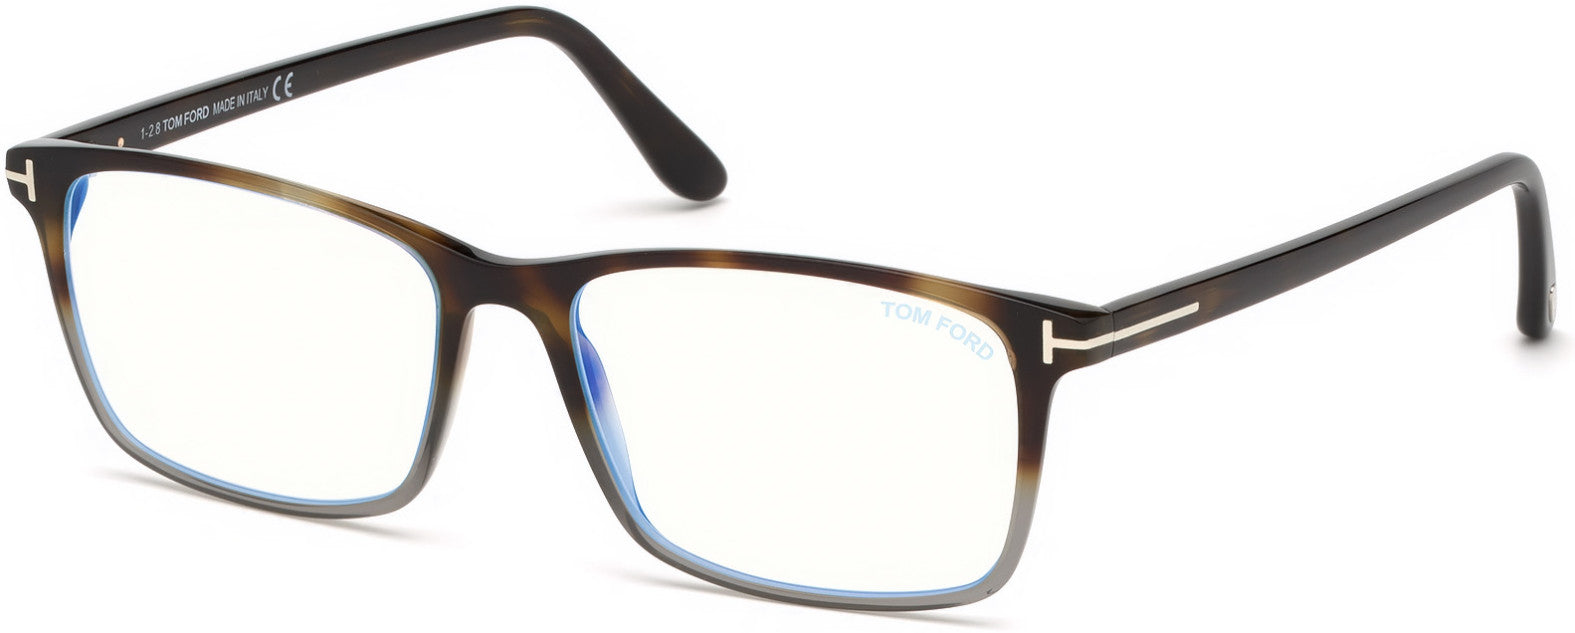 Tom Ford FT5584-B Geometric Eyeglasses 056-056 - Shiny Havana & Grey, Palladium "t" Logo / Blue Block Lenses